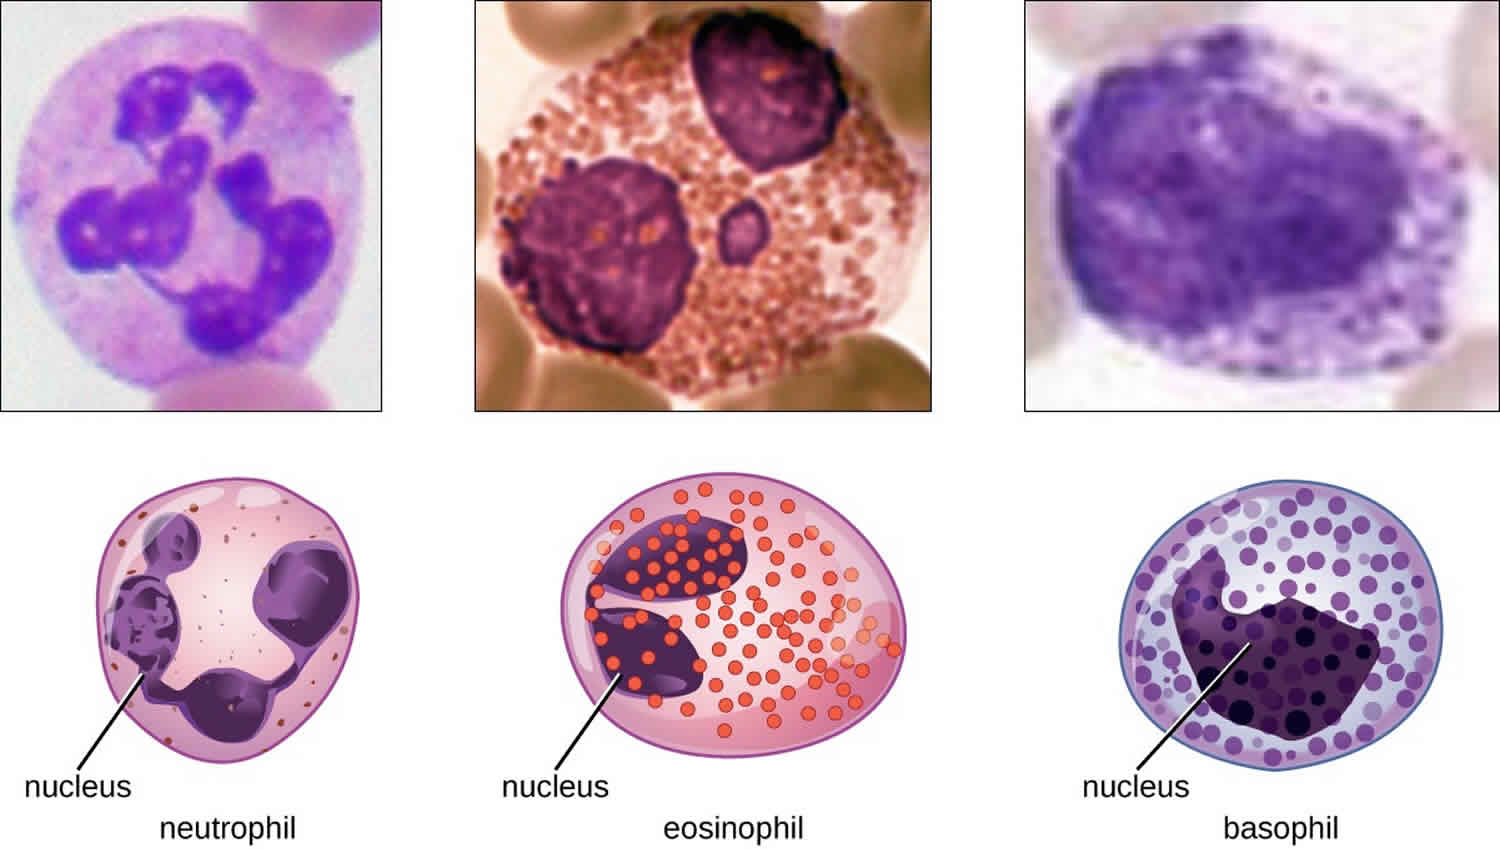 granulocytes